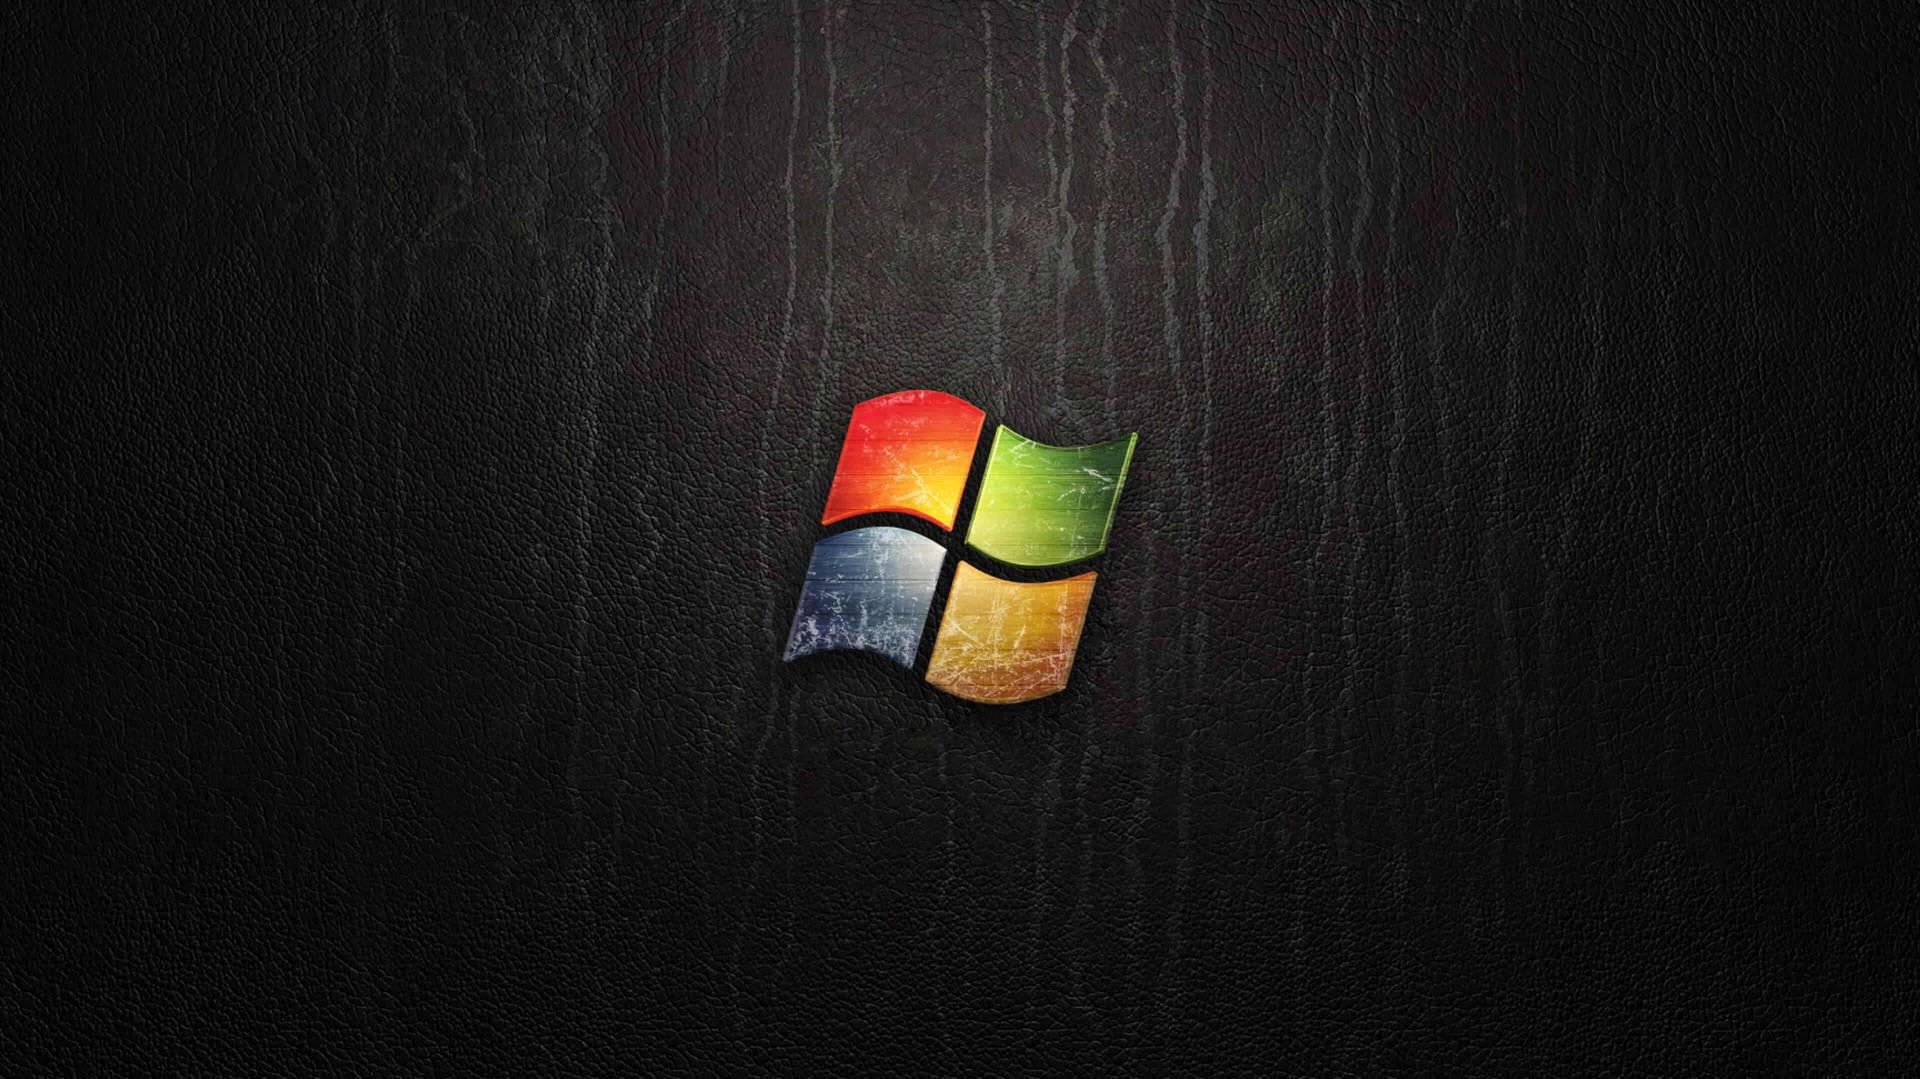  Microsoft Wallpapers